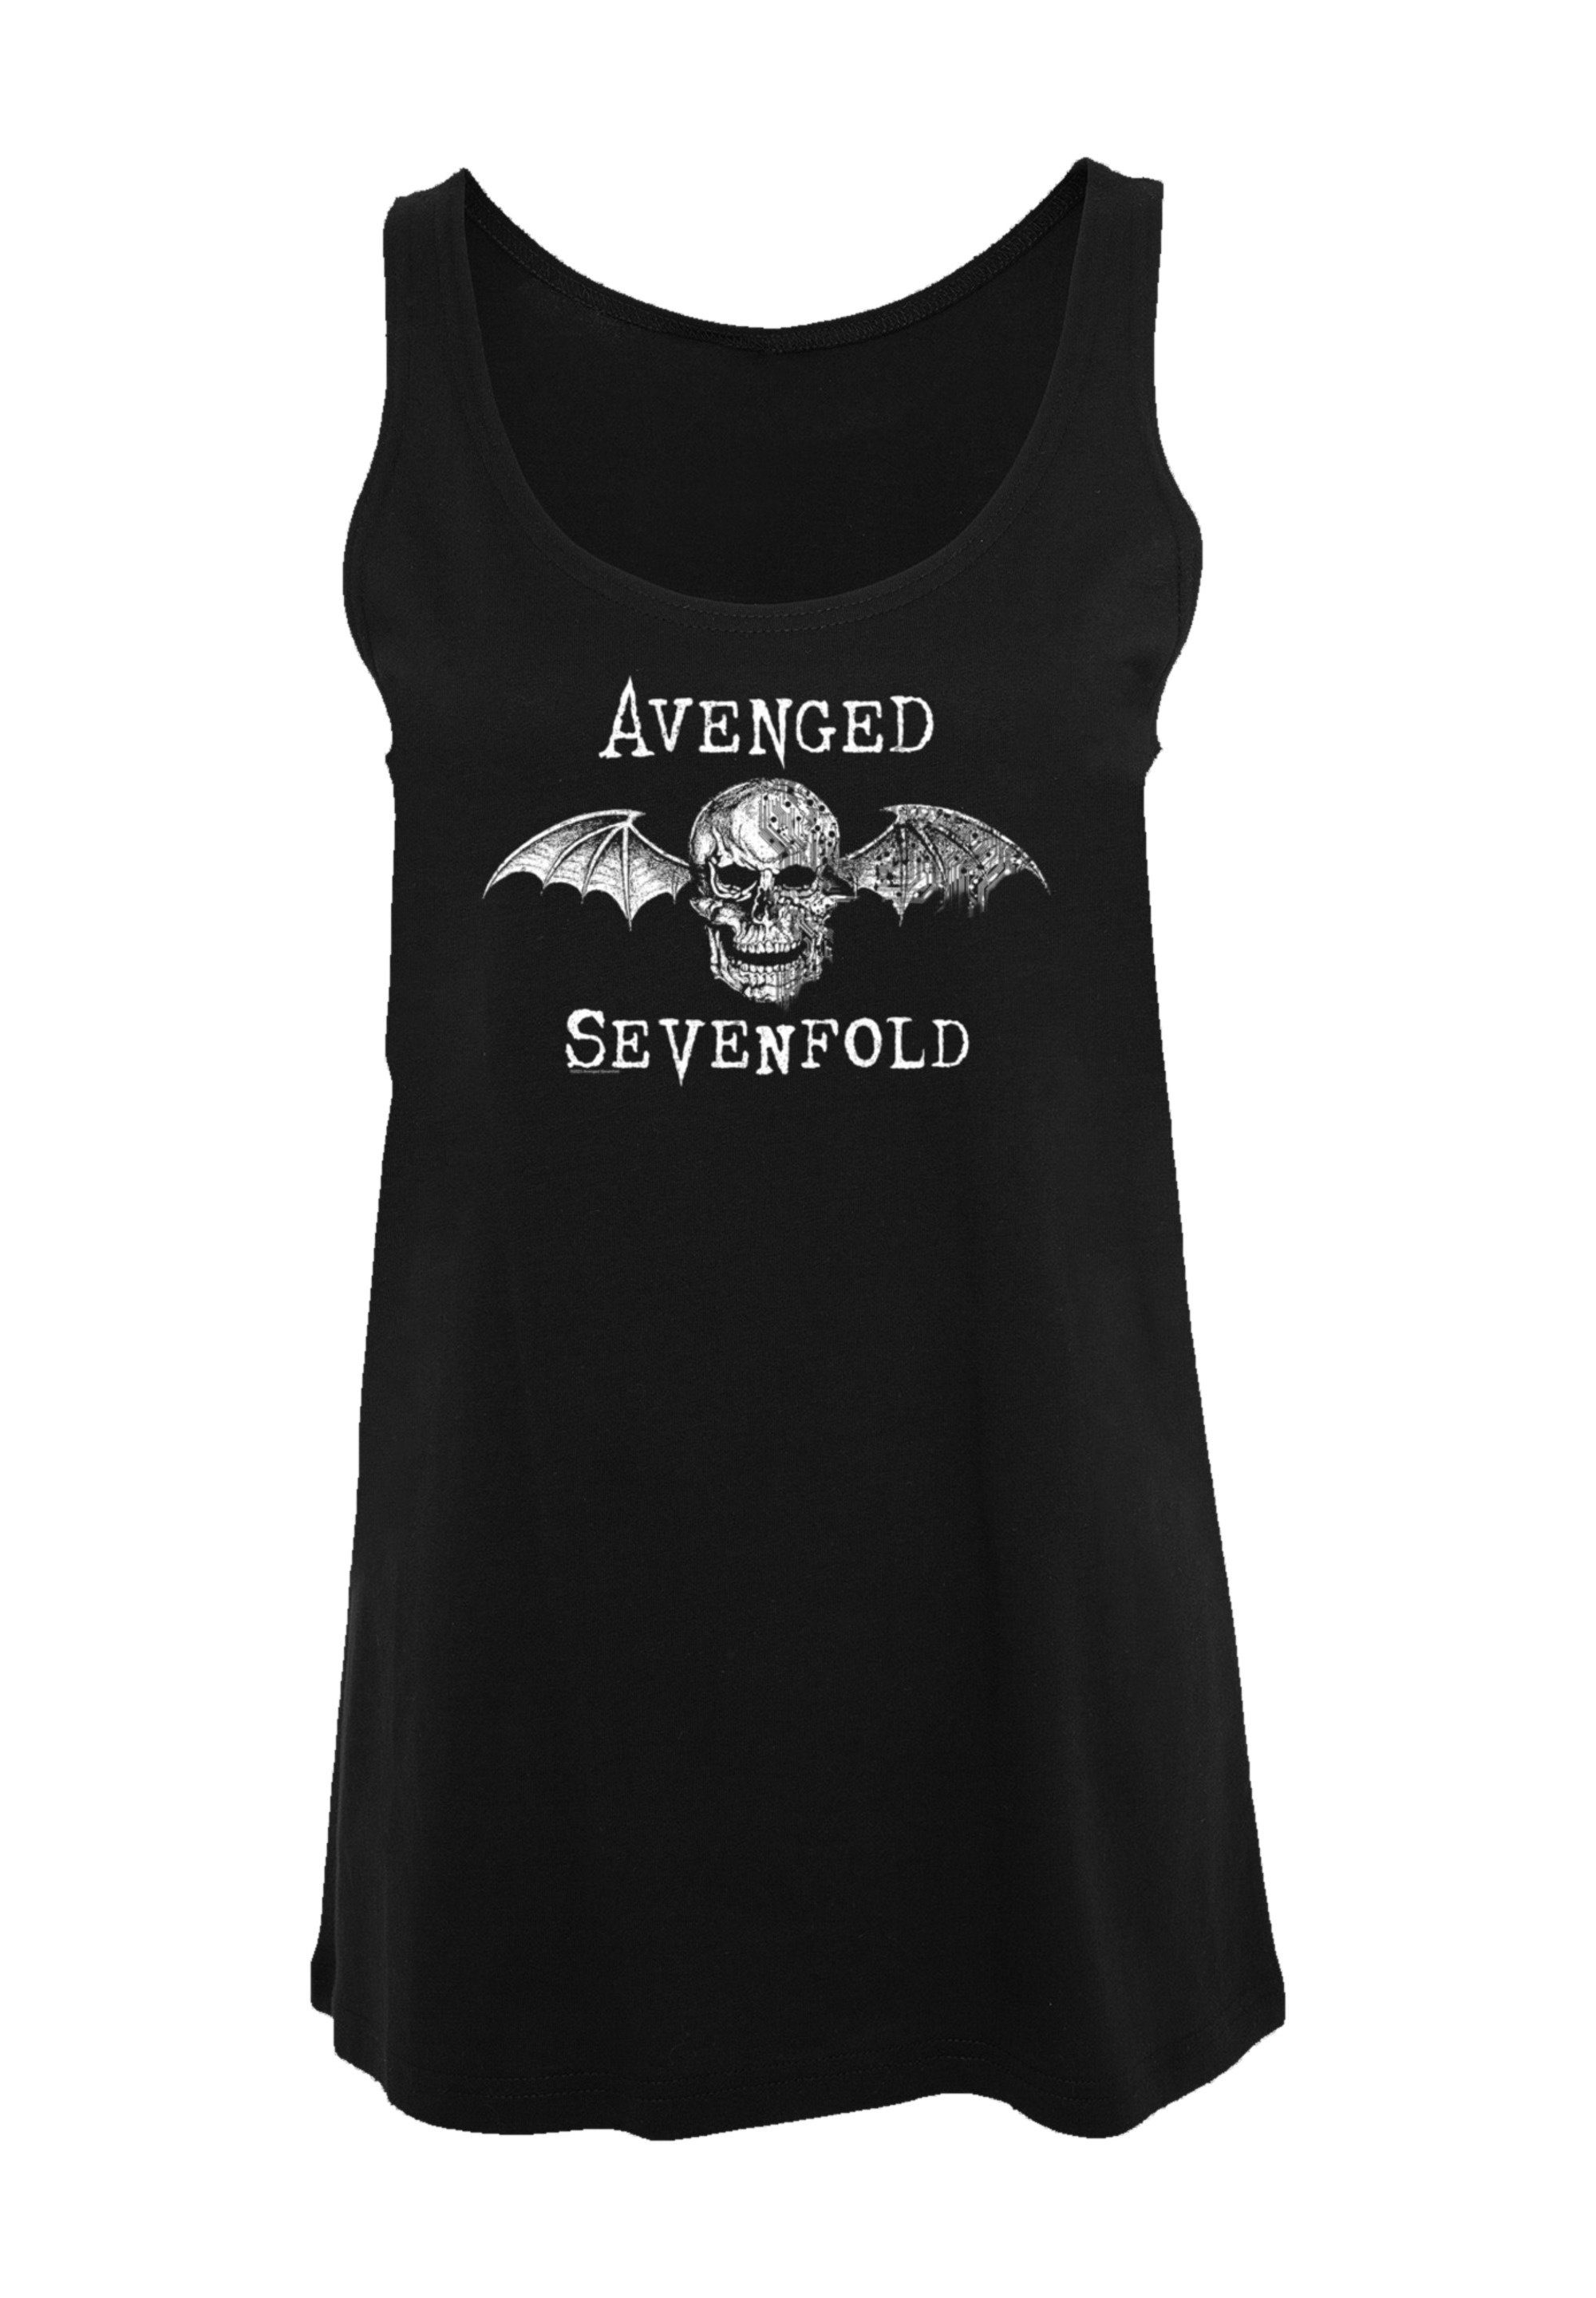 Avenged Metal Sevenfold T-Shirt Bat Band Qualität, Rock-Musik Band, Rock Premium Cyborg F4NT4STIC